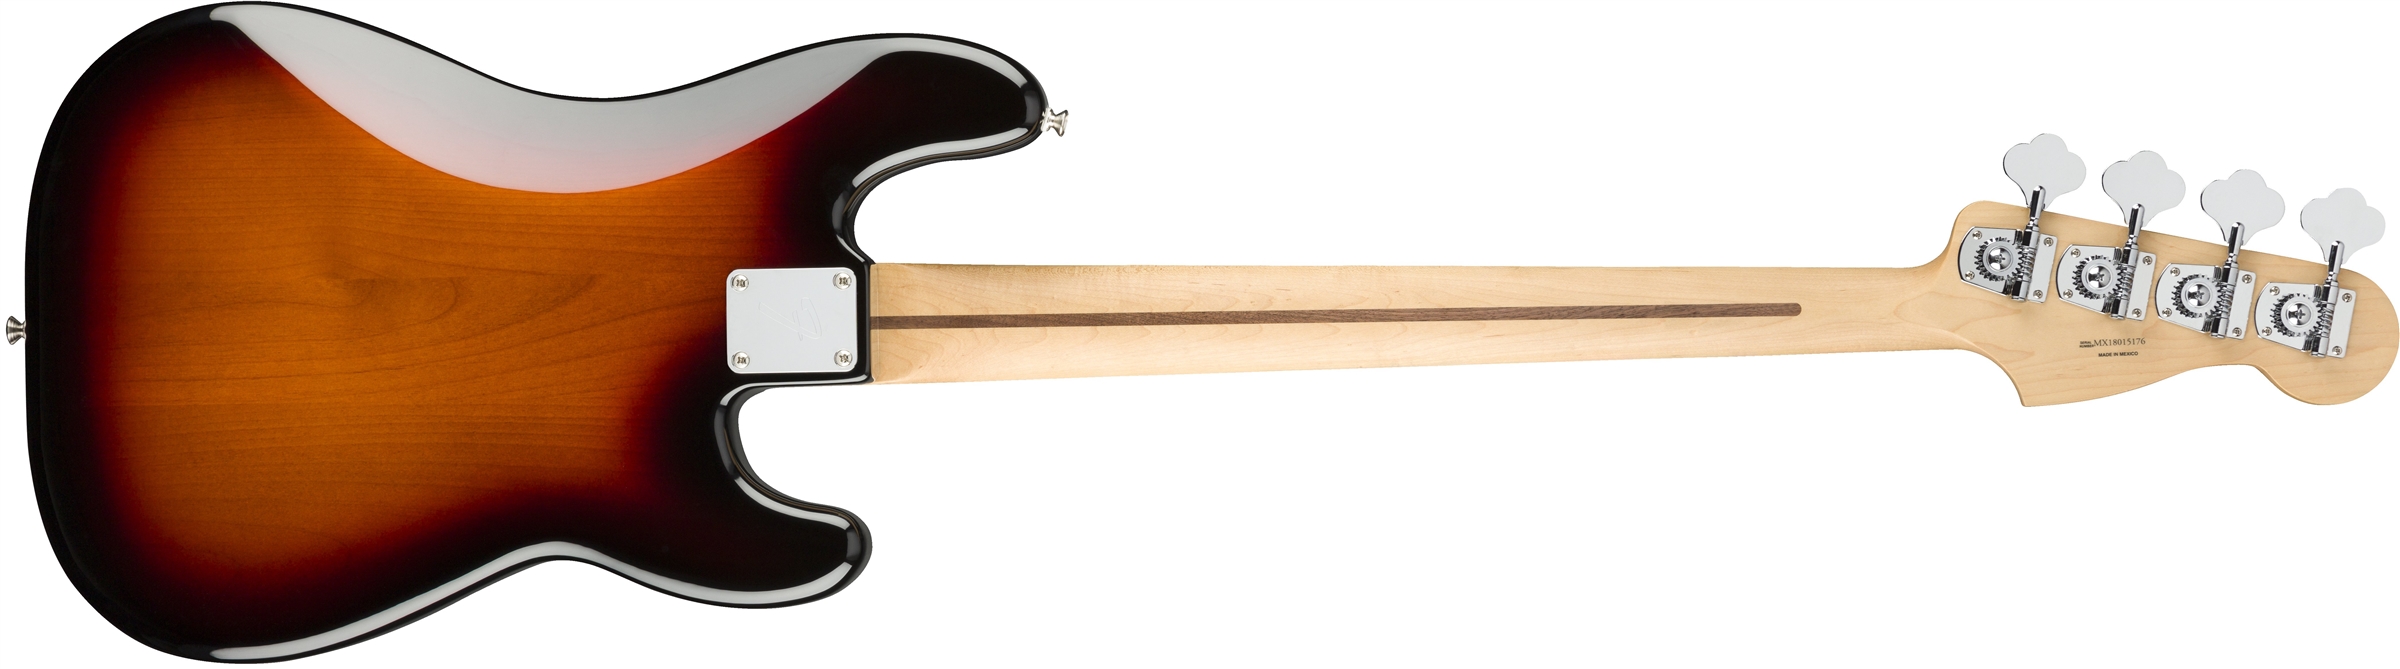 Fender Precision Bass Player Lh Gaucher Mex Pf - 3-color Sunburst - Solid body electric bass - Variation 1